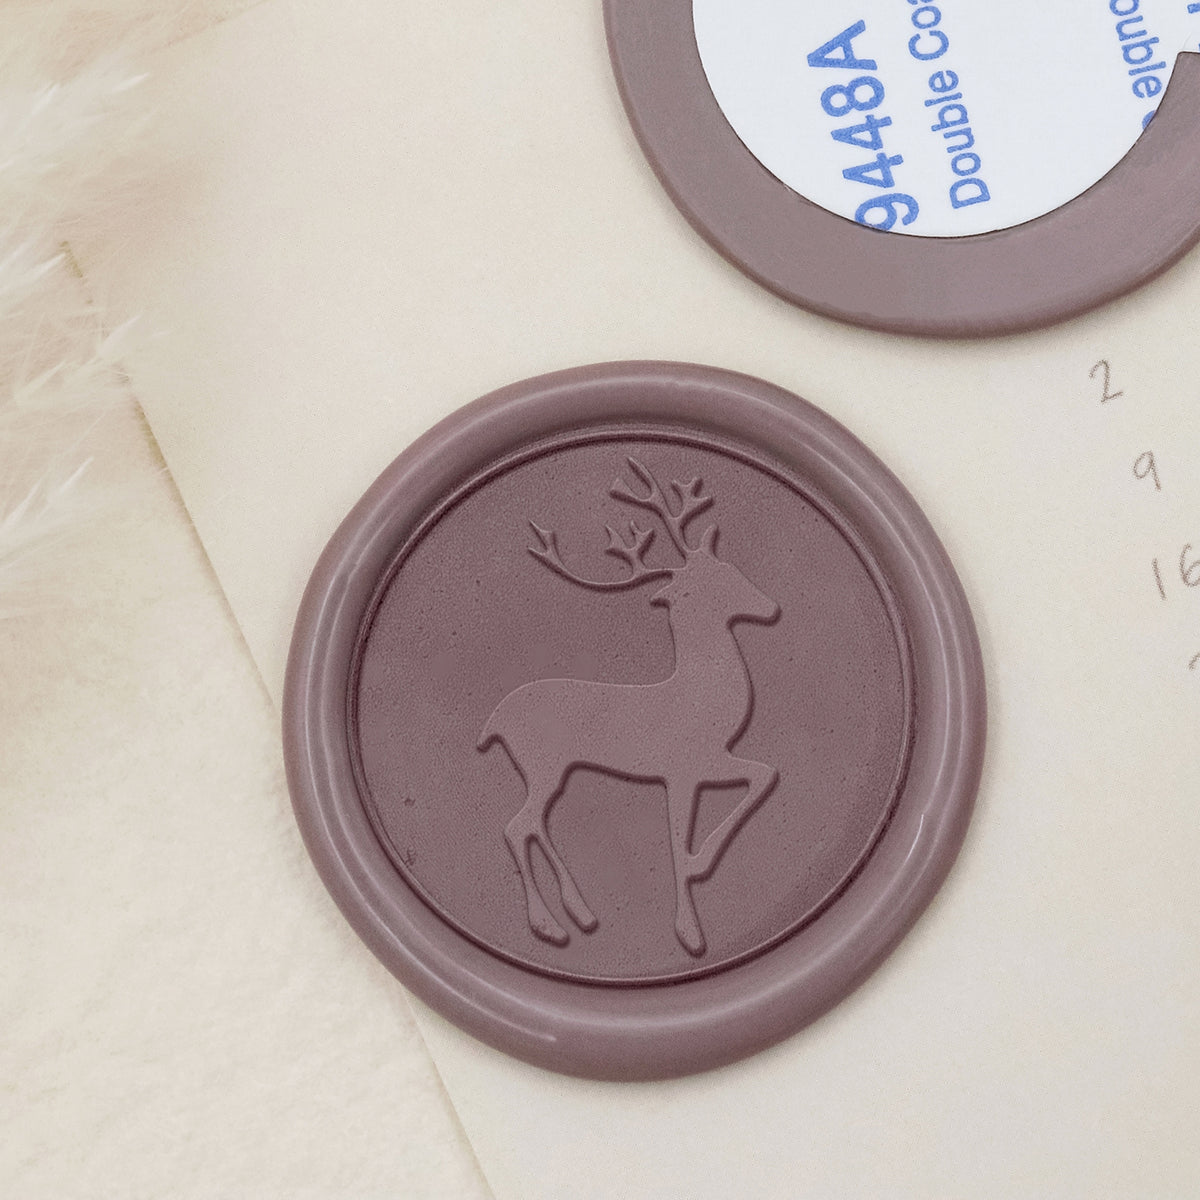 Stamprints ELK Self-adhesive Wax Seal Stickers - style 12-1